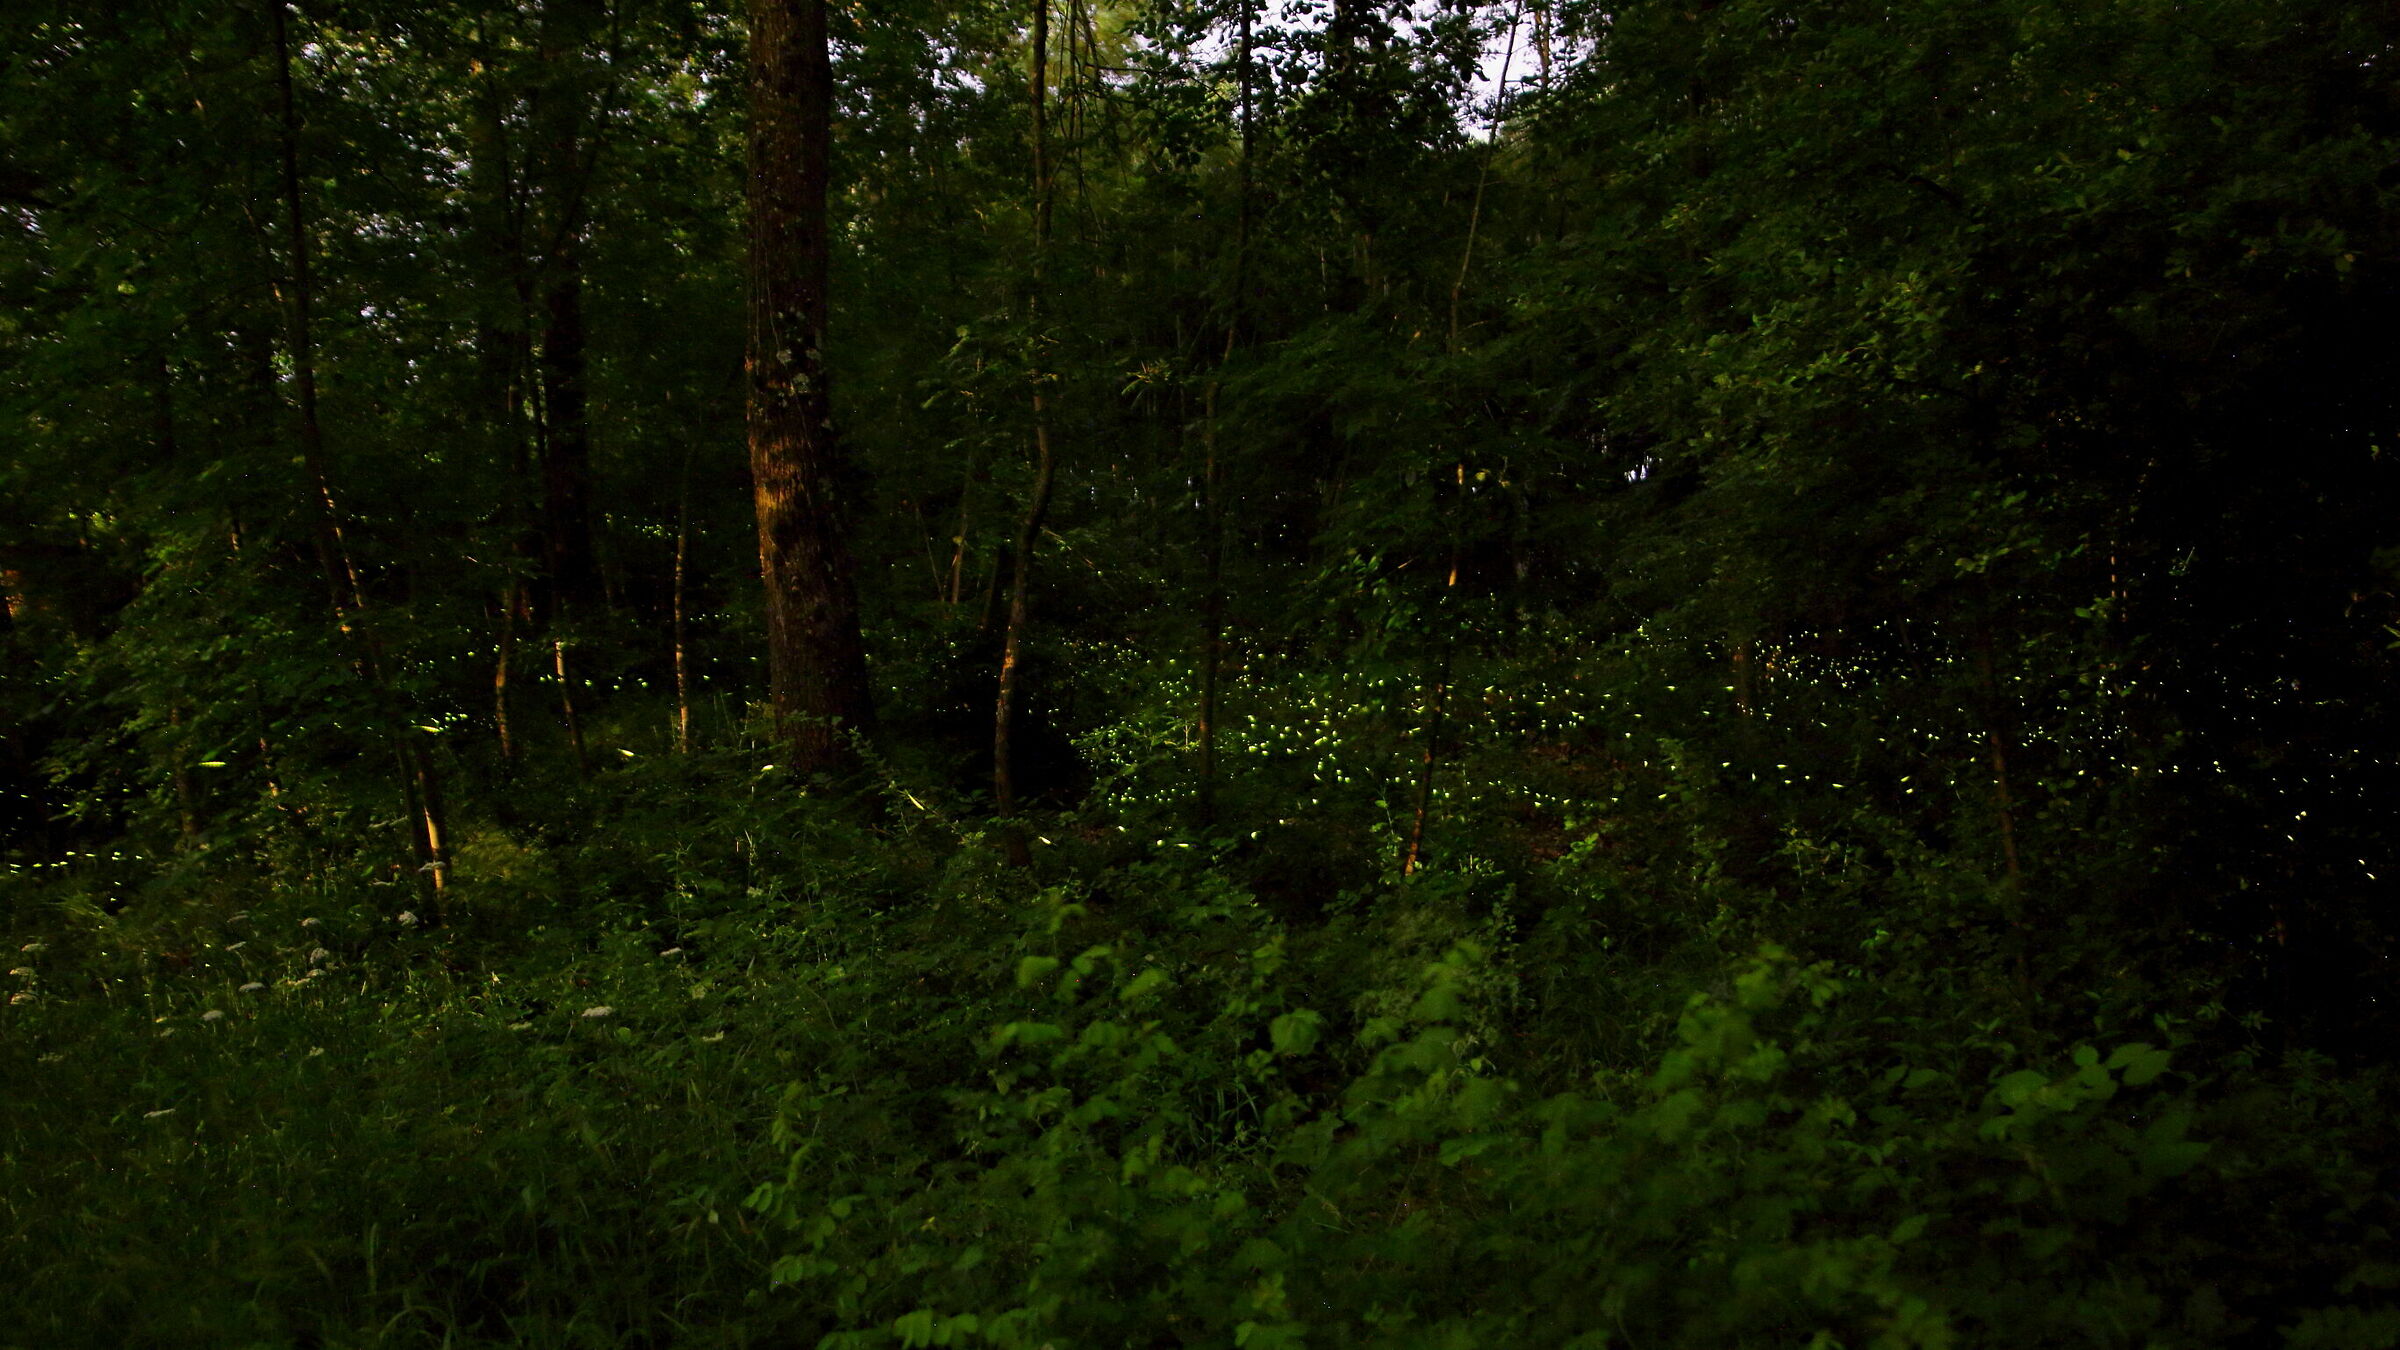 Fireflies in the woods...